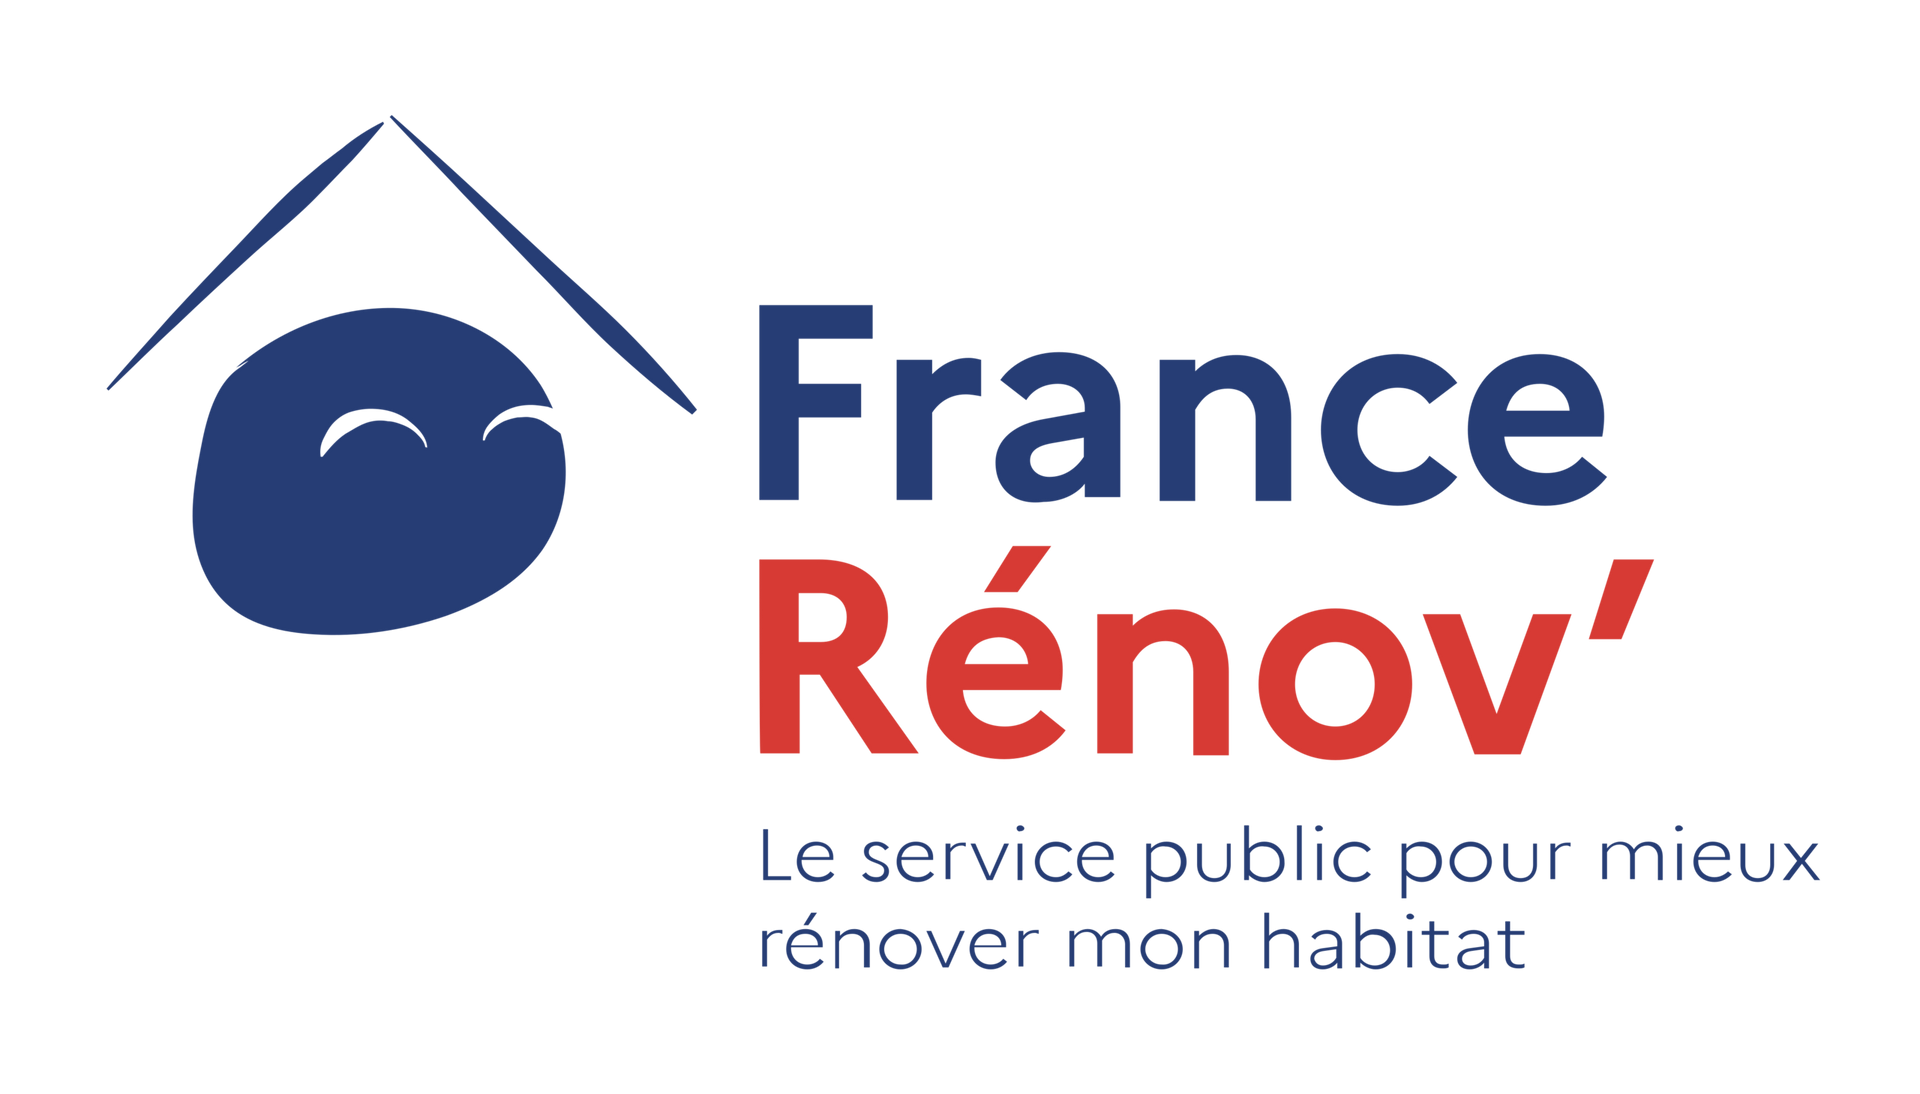 Logo France Rénov'